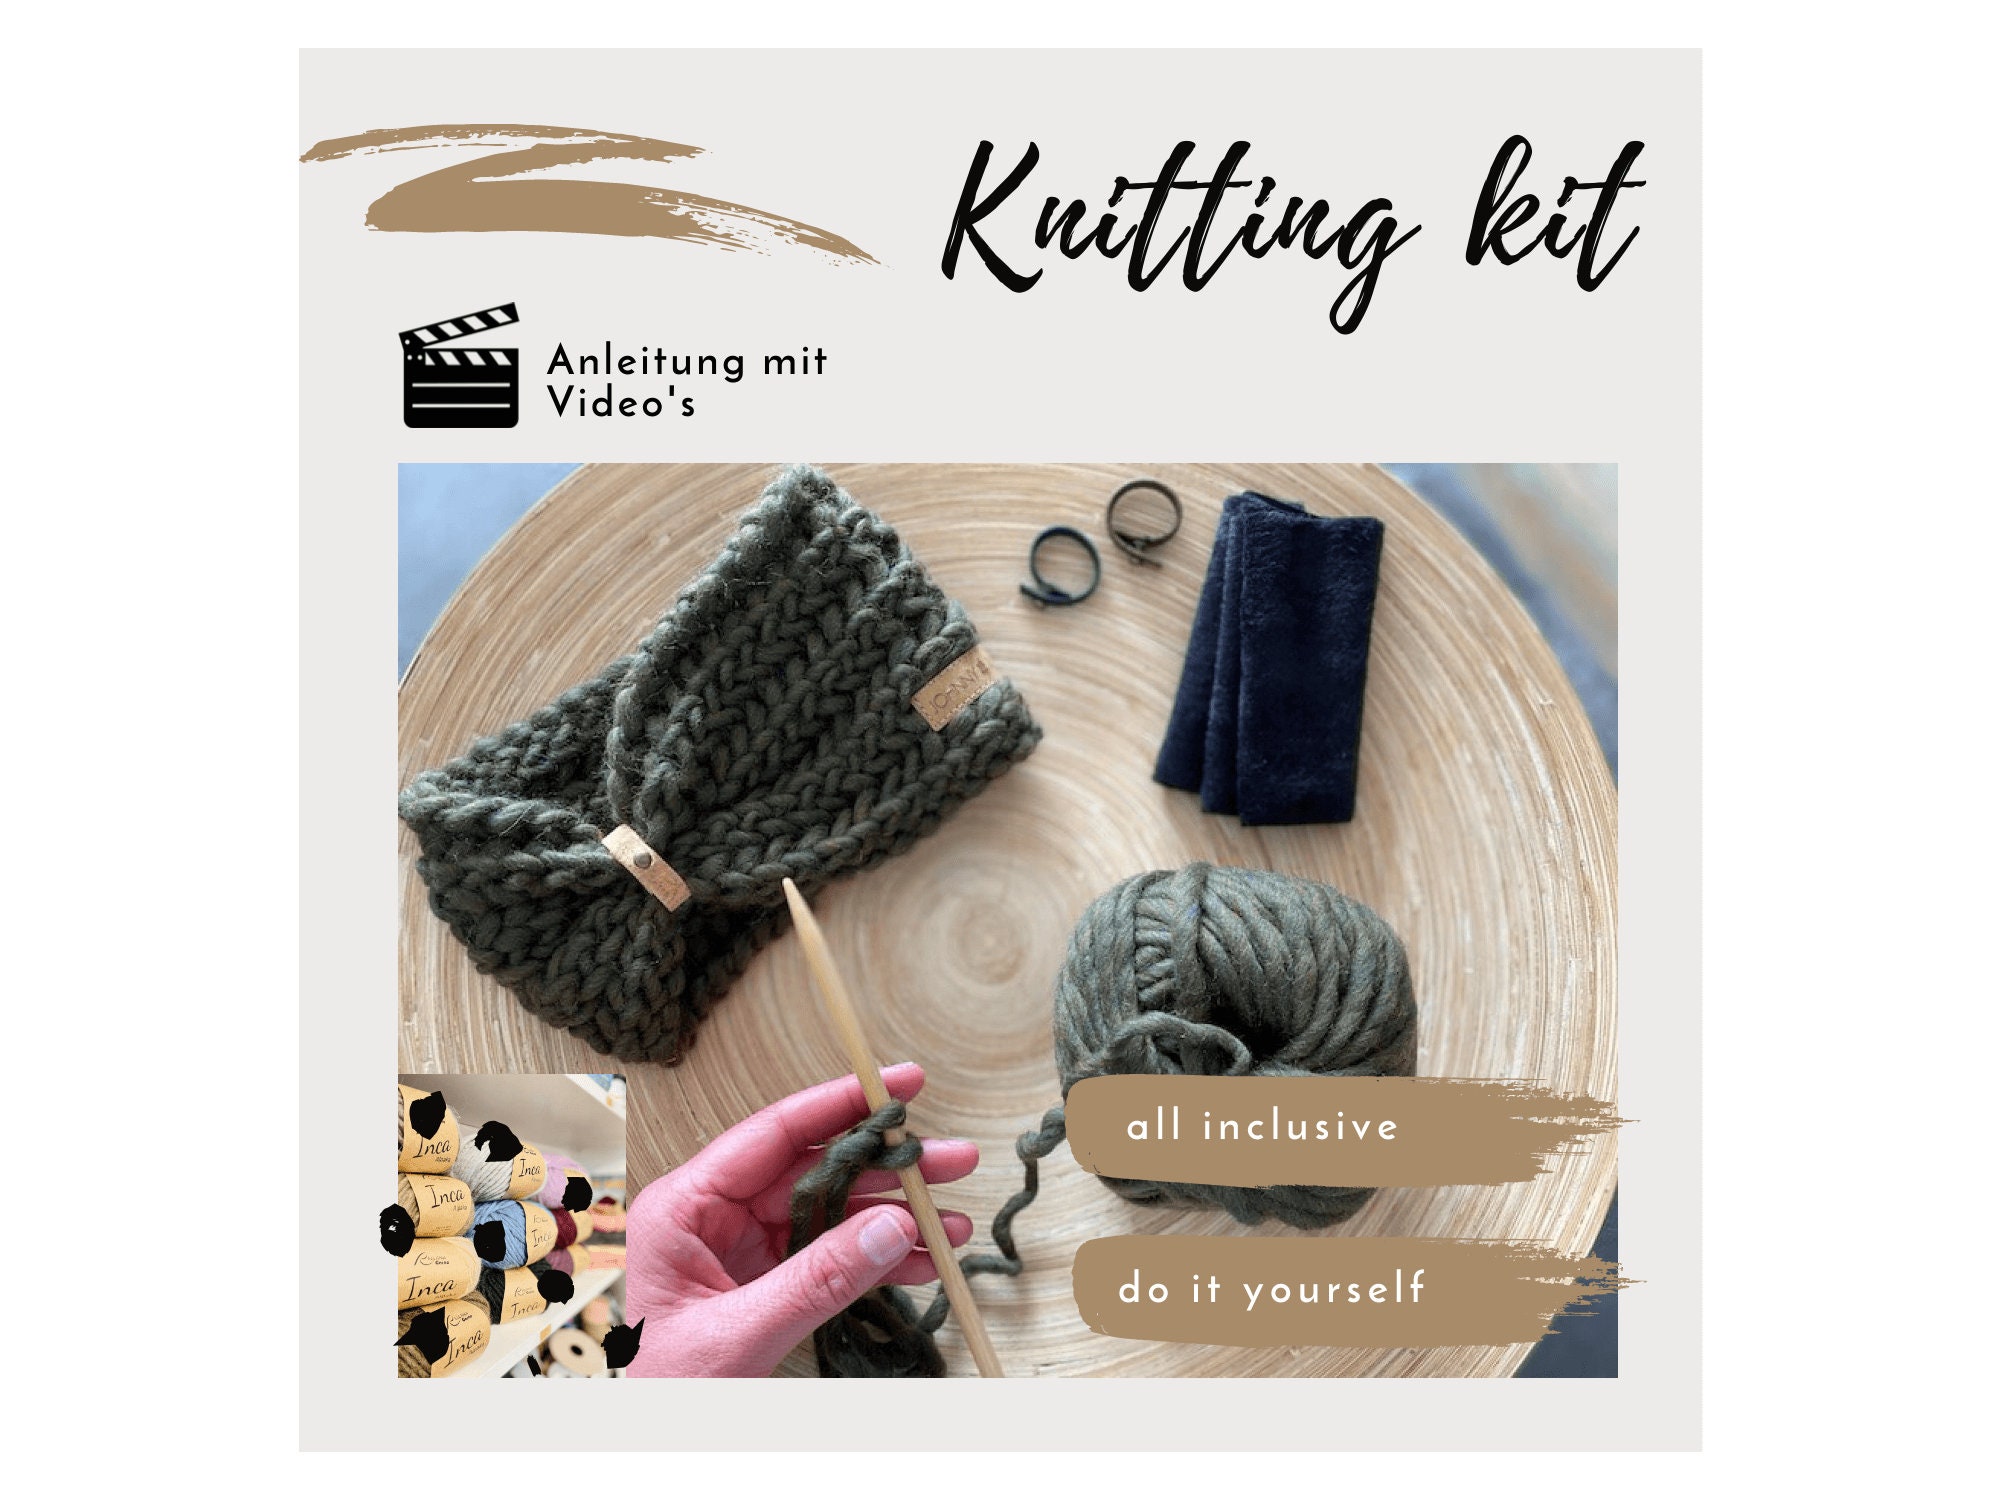 Beginner Knitting Kit // Knitting Kit // Scarf Knitting Kit // DIY